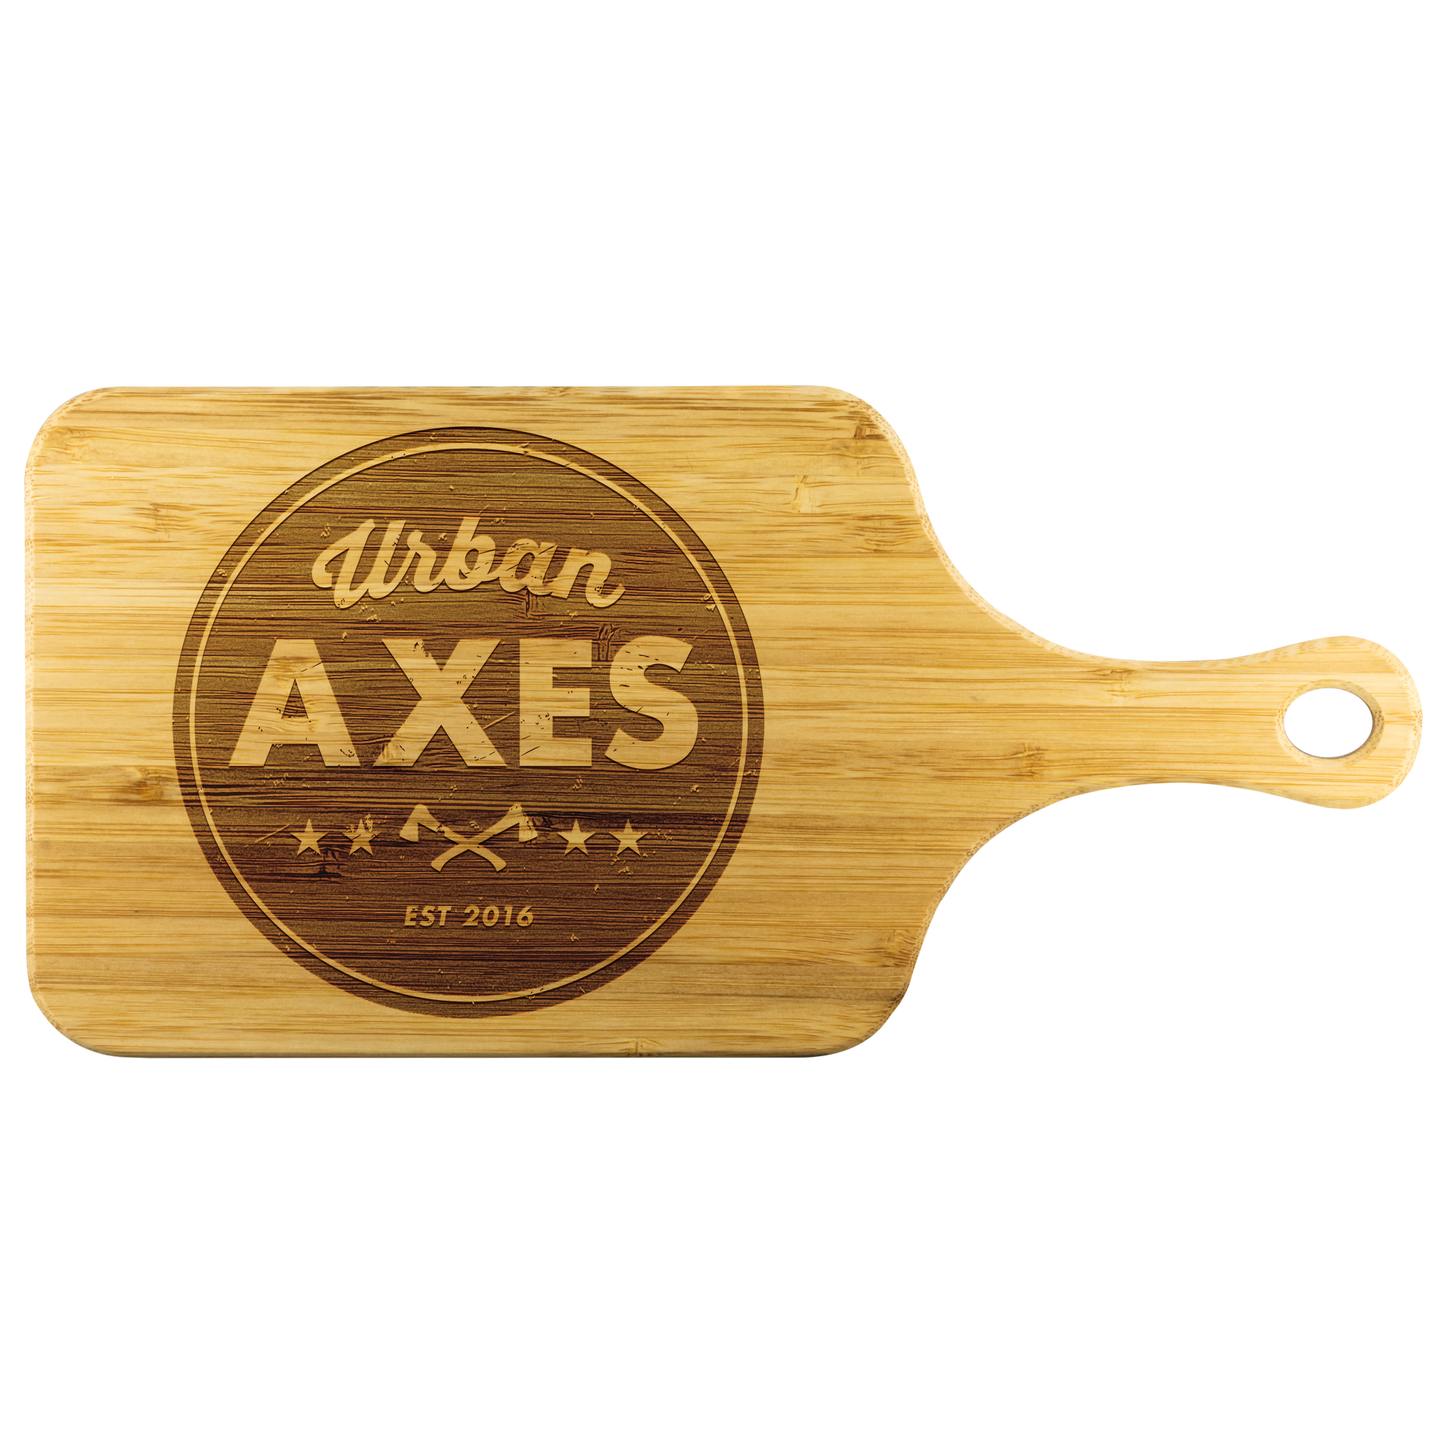 Urban Axes Cutting Board with handle!